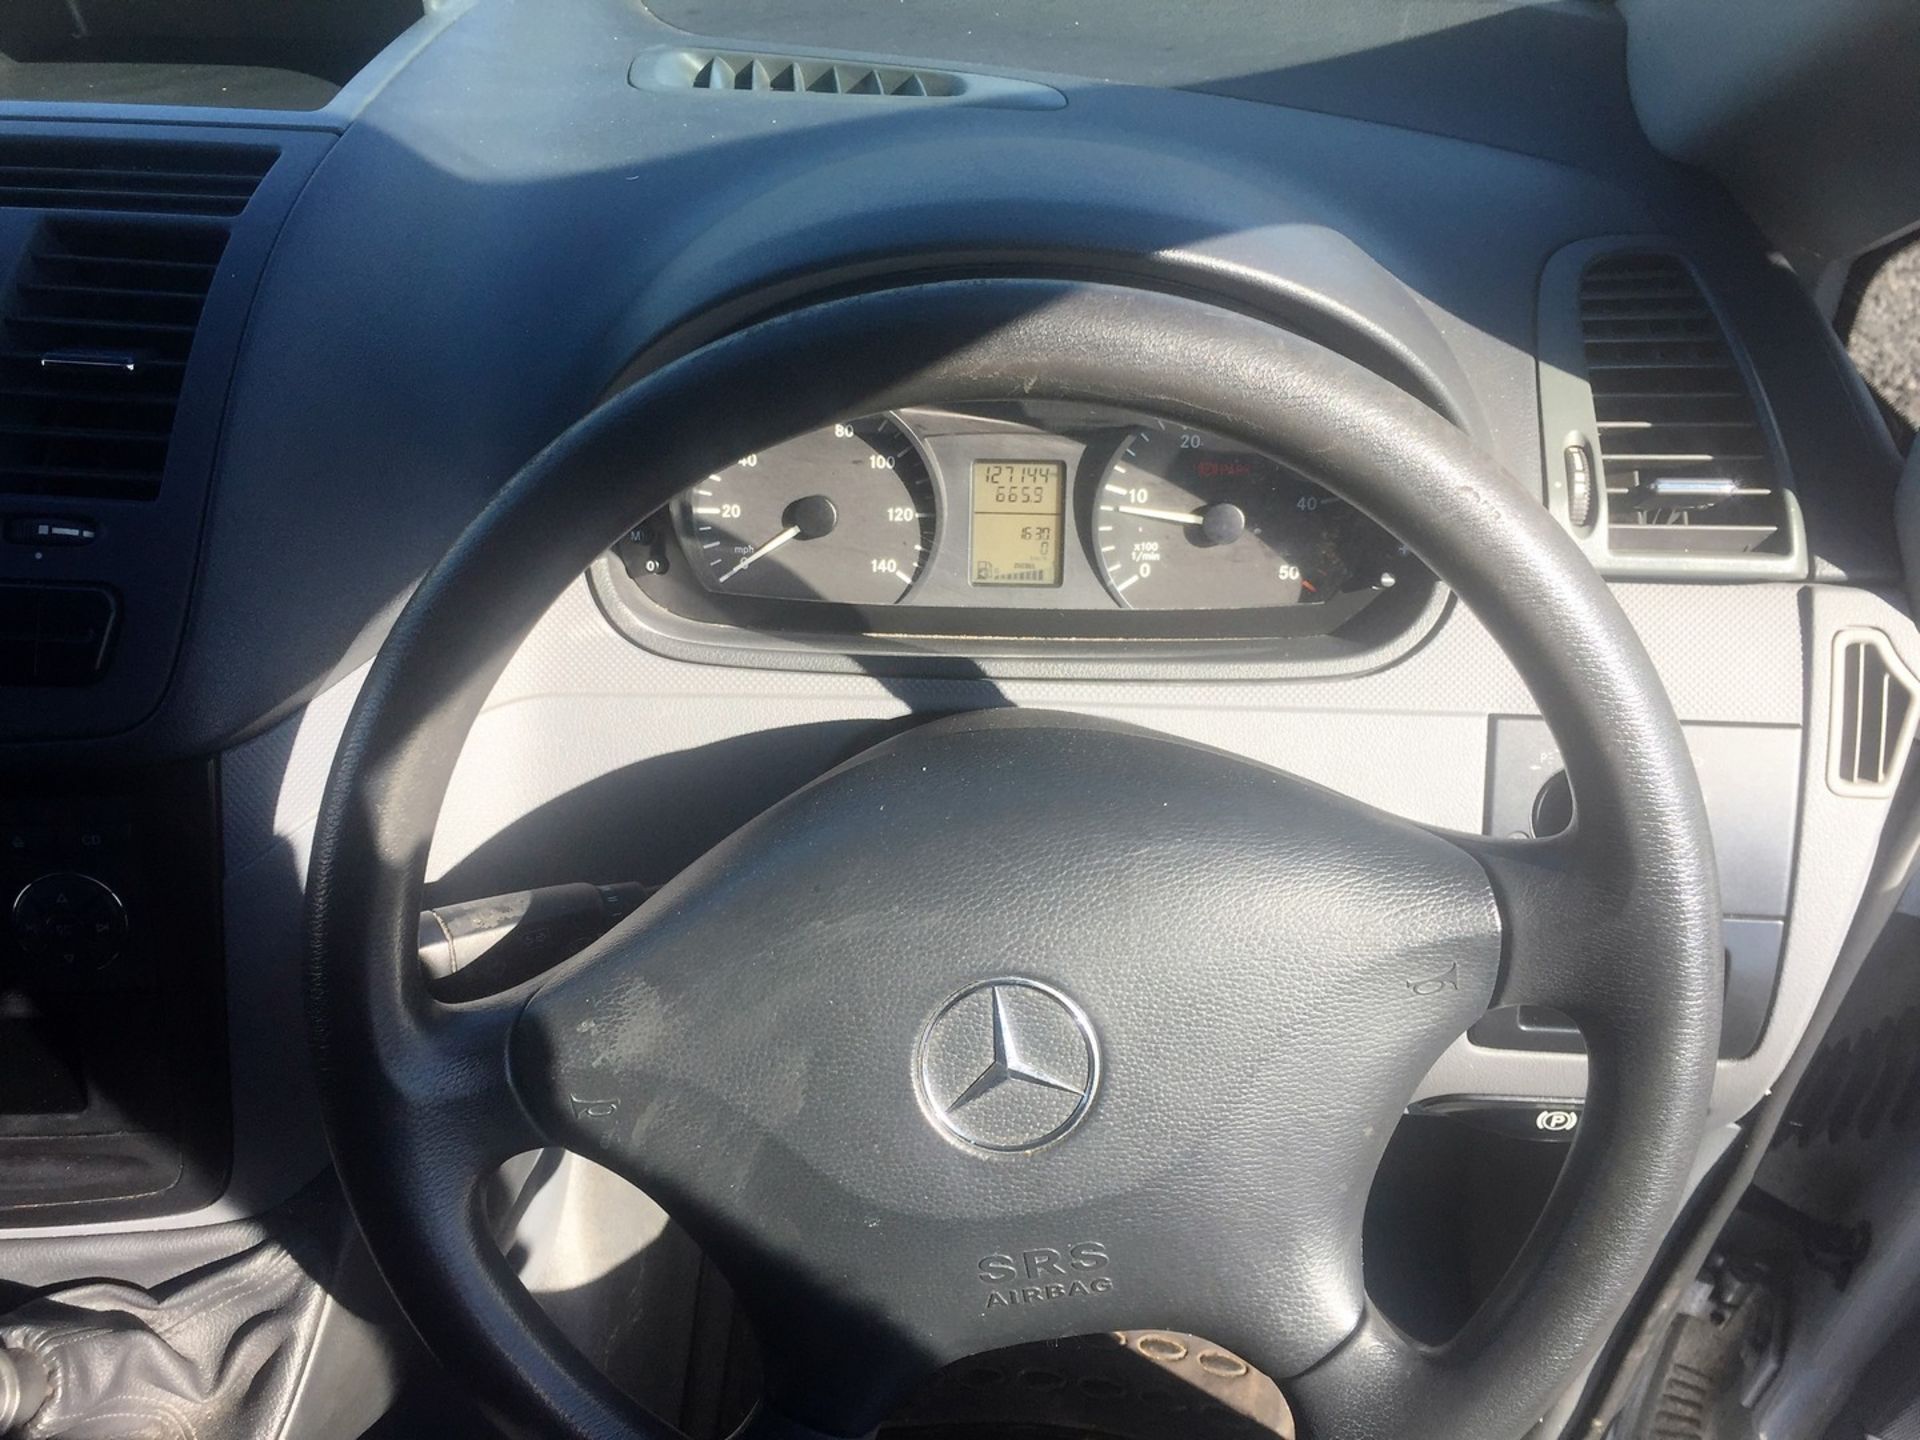 2009, Mercedes Vito 109 CDI LWB +3 Window van 6 seater Reg no. VK59 OKN, RM 127,144 Approx, Mot - Image 21 of 24